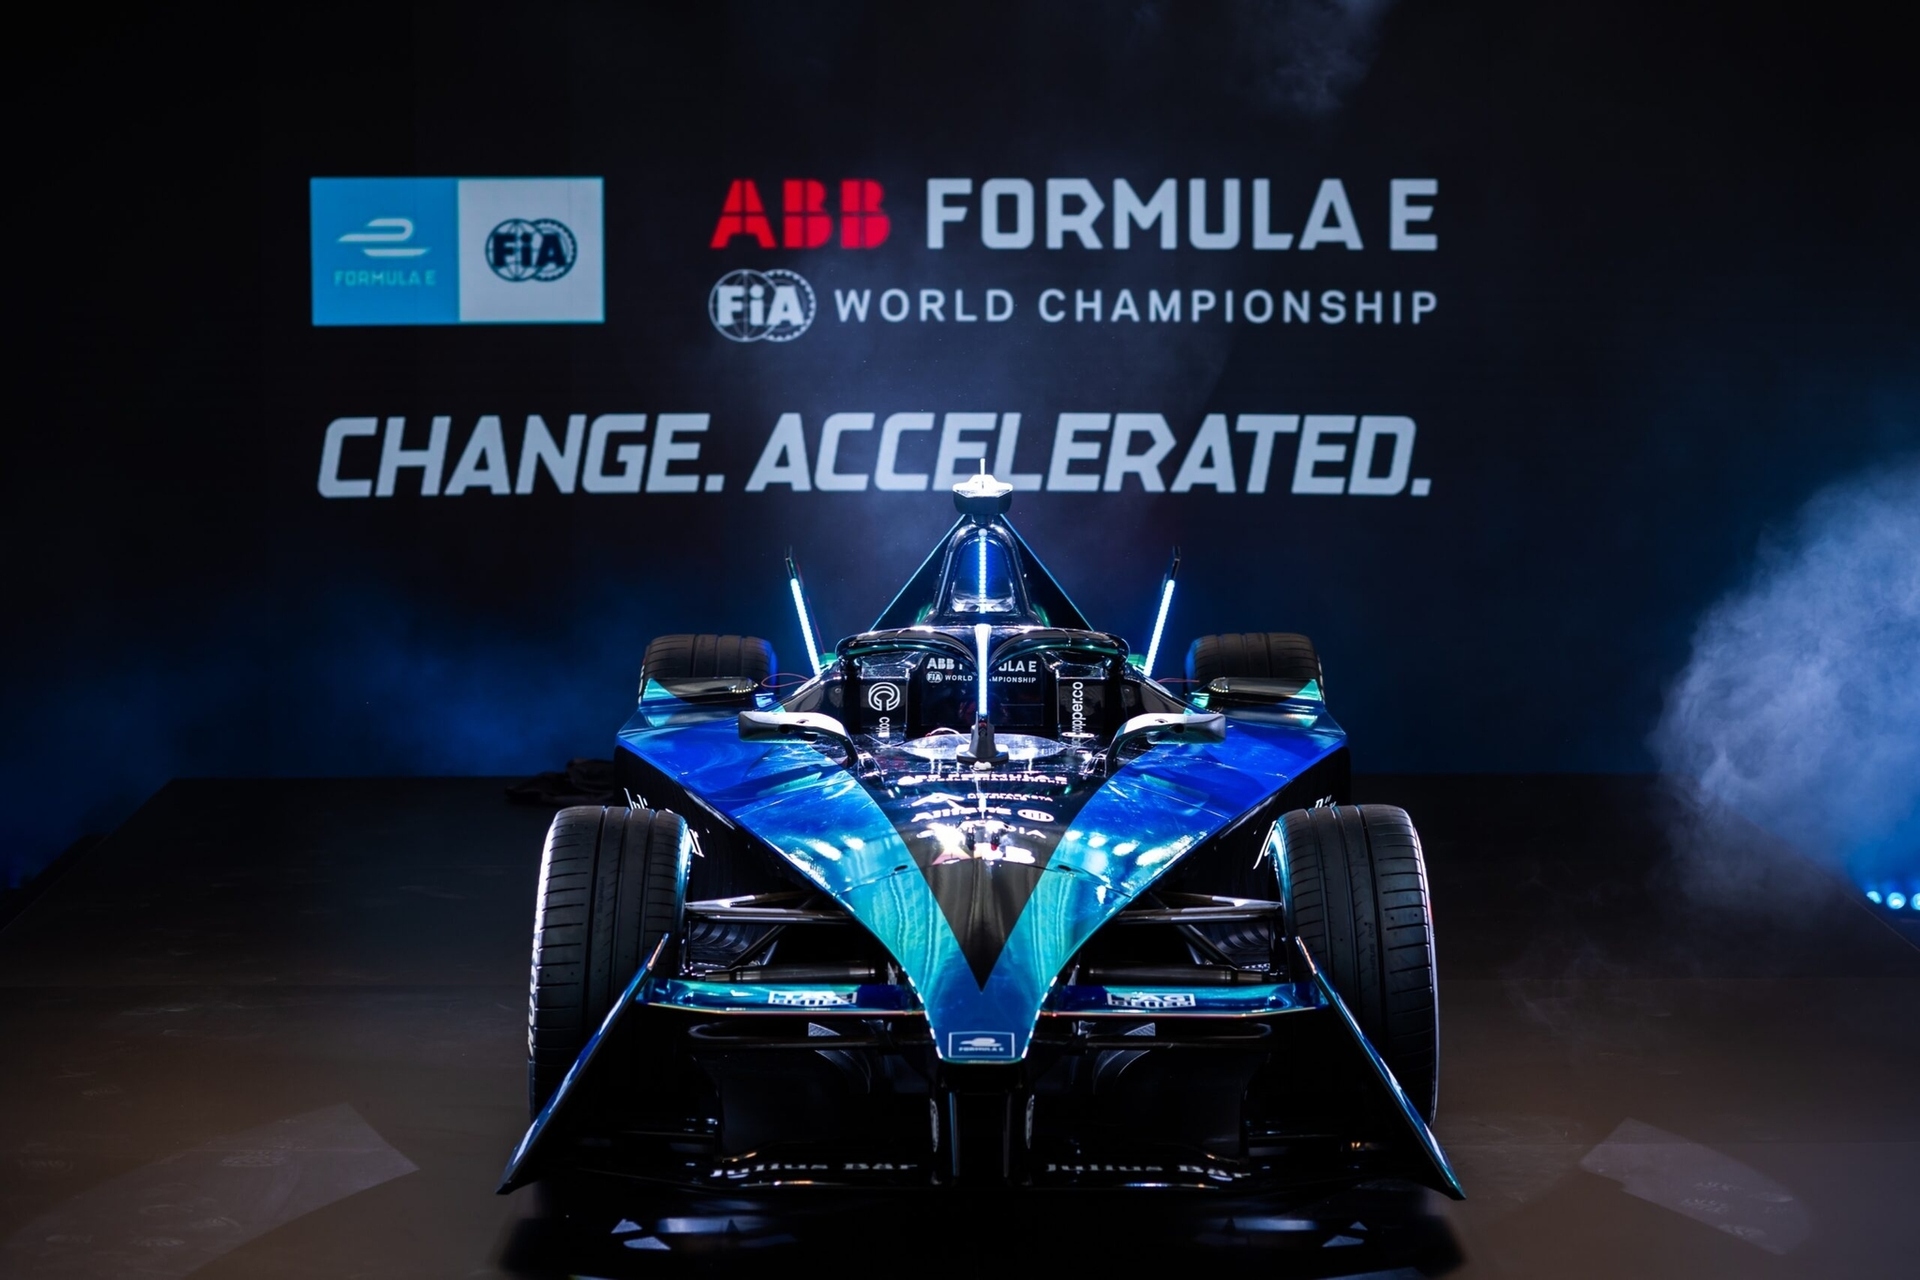 Gen3: Gen3 یک نفره بسیار نوآورانه است و از فصل نهم مسابقات قهرمانی جهانی FIA ABB Formula E استفاده خواهد شد: مربع بین عملکرد و پایداری